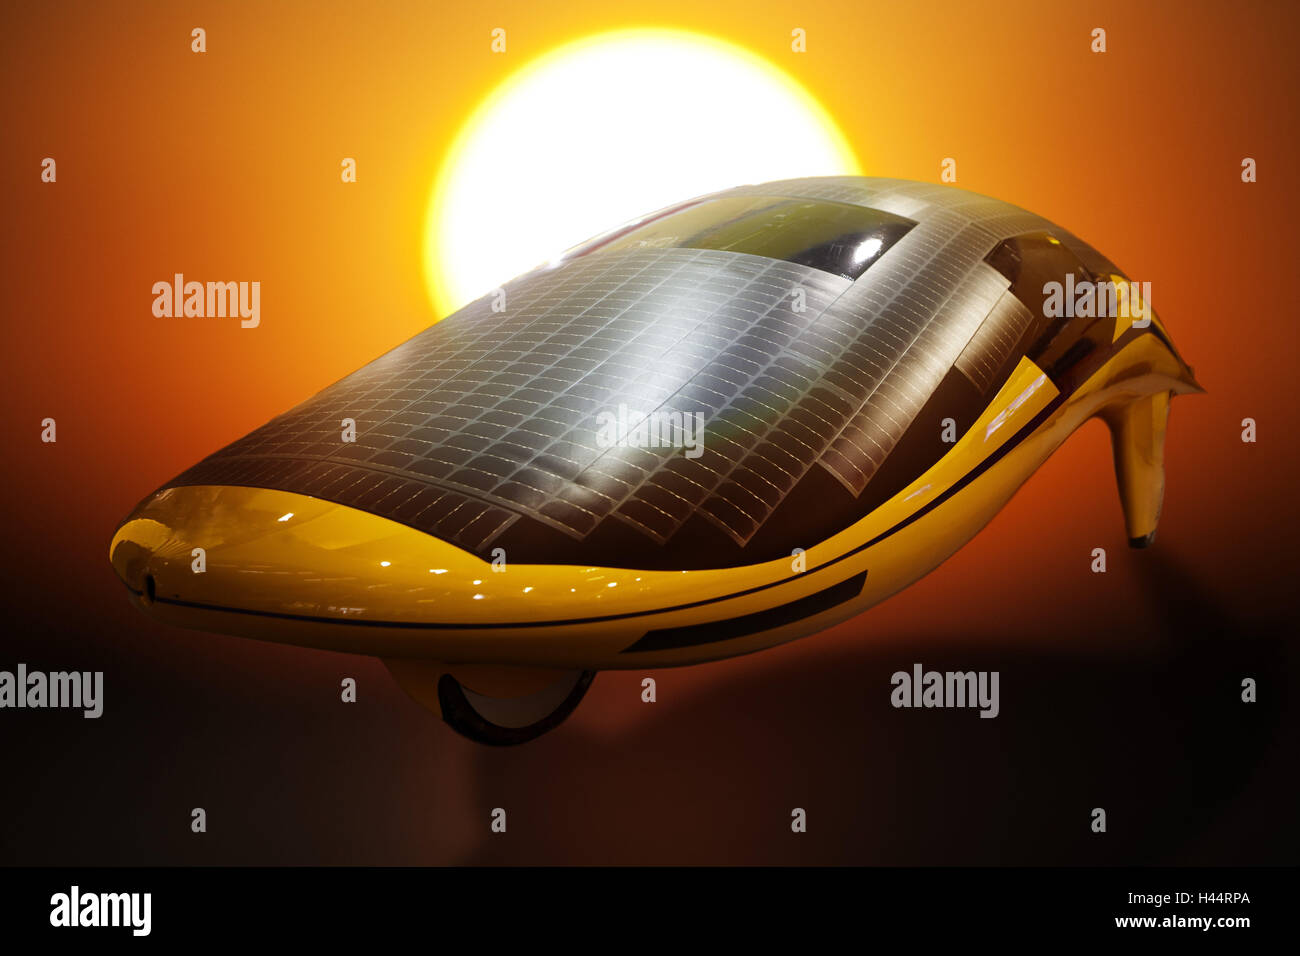 Electromobile con colectores solares, futurista, Foto de stock